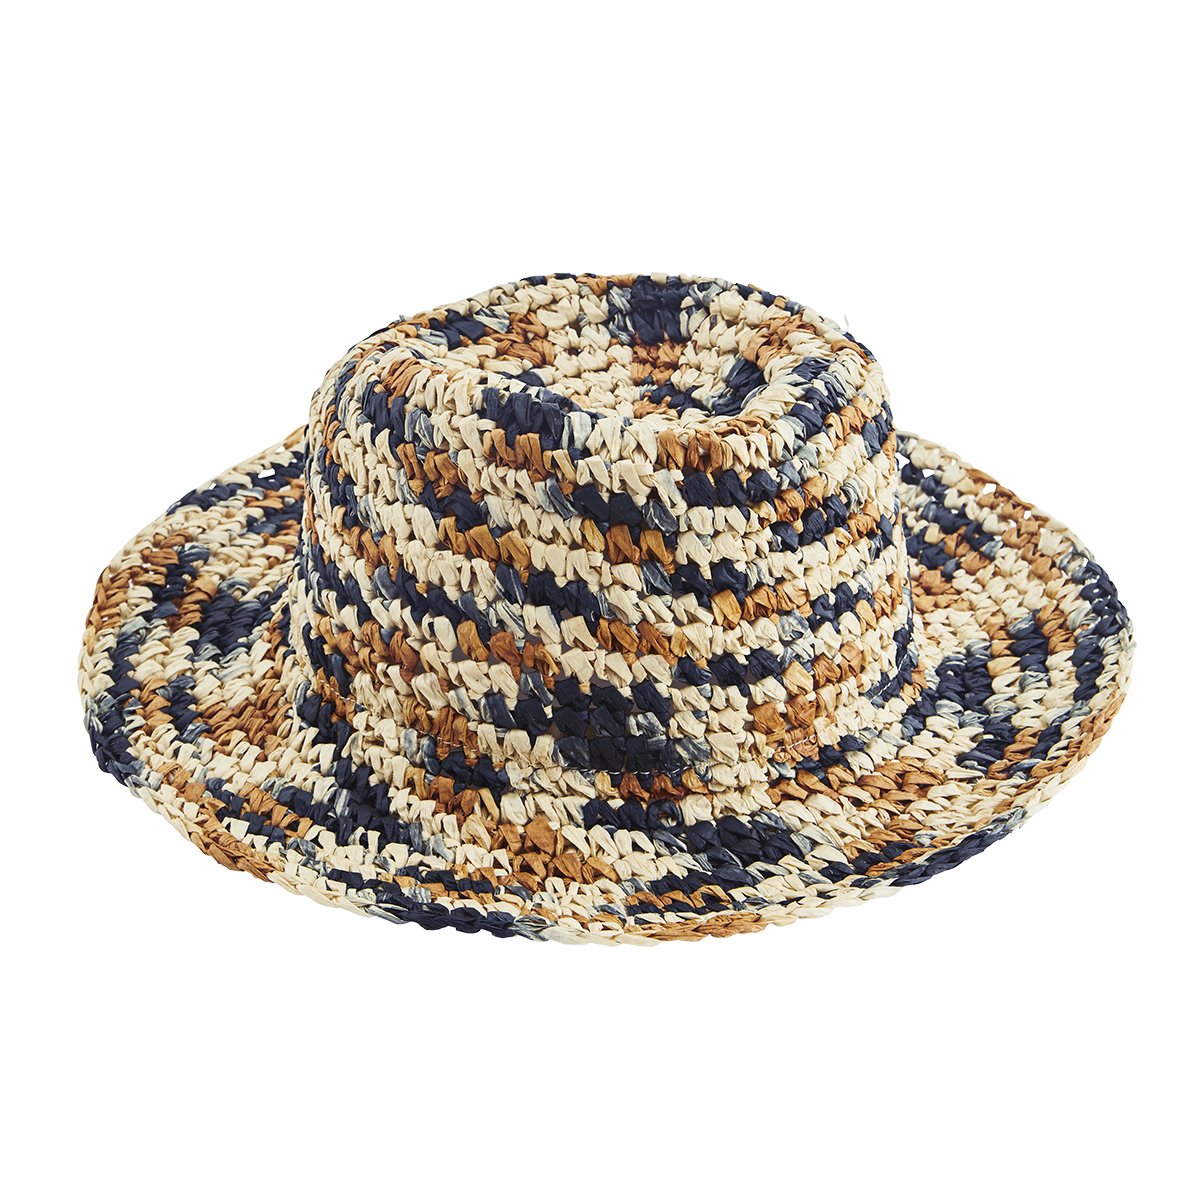 Crochet paper rope hat